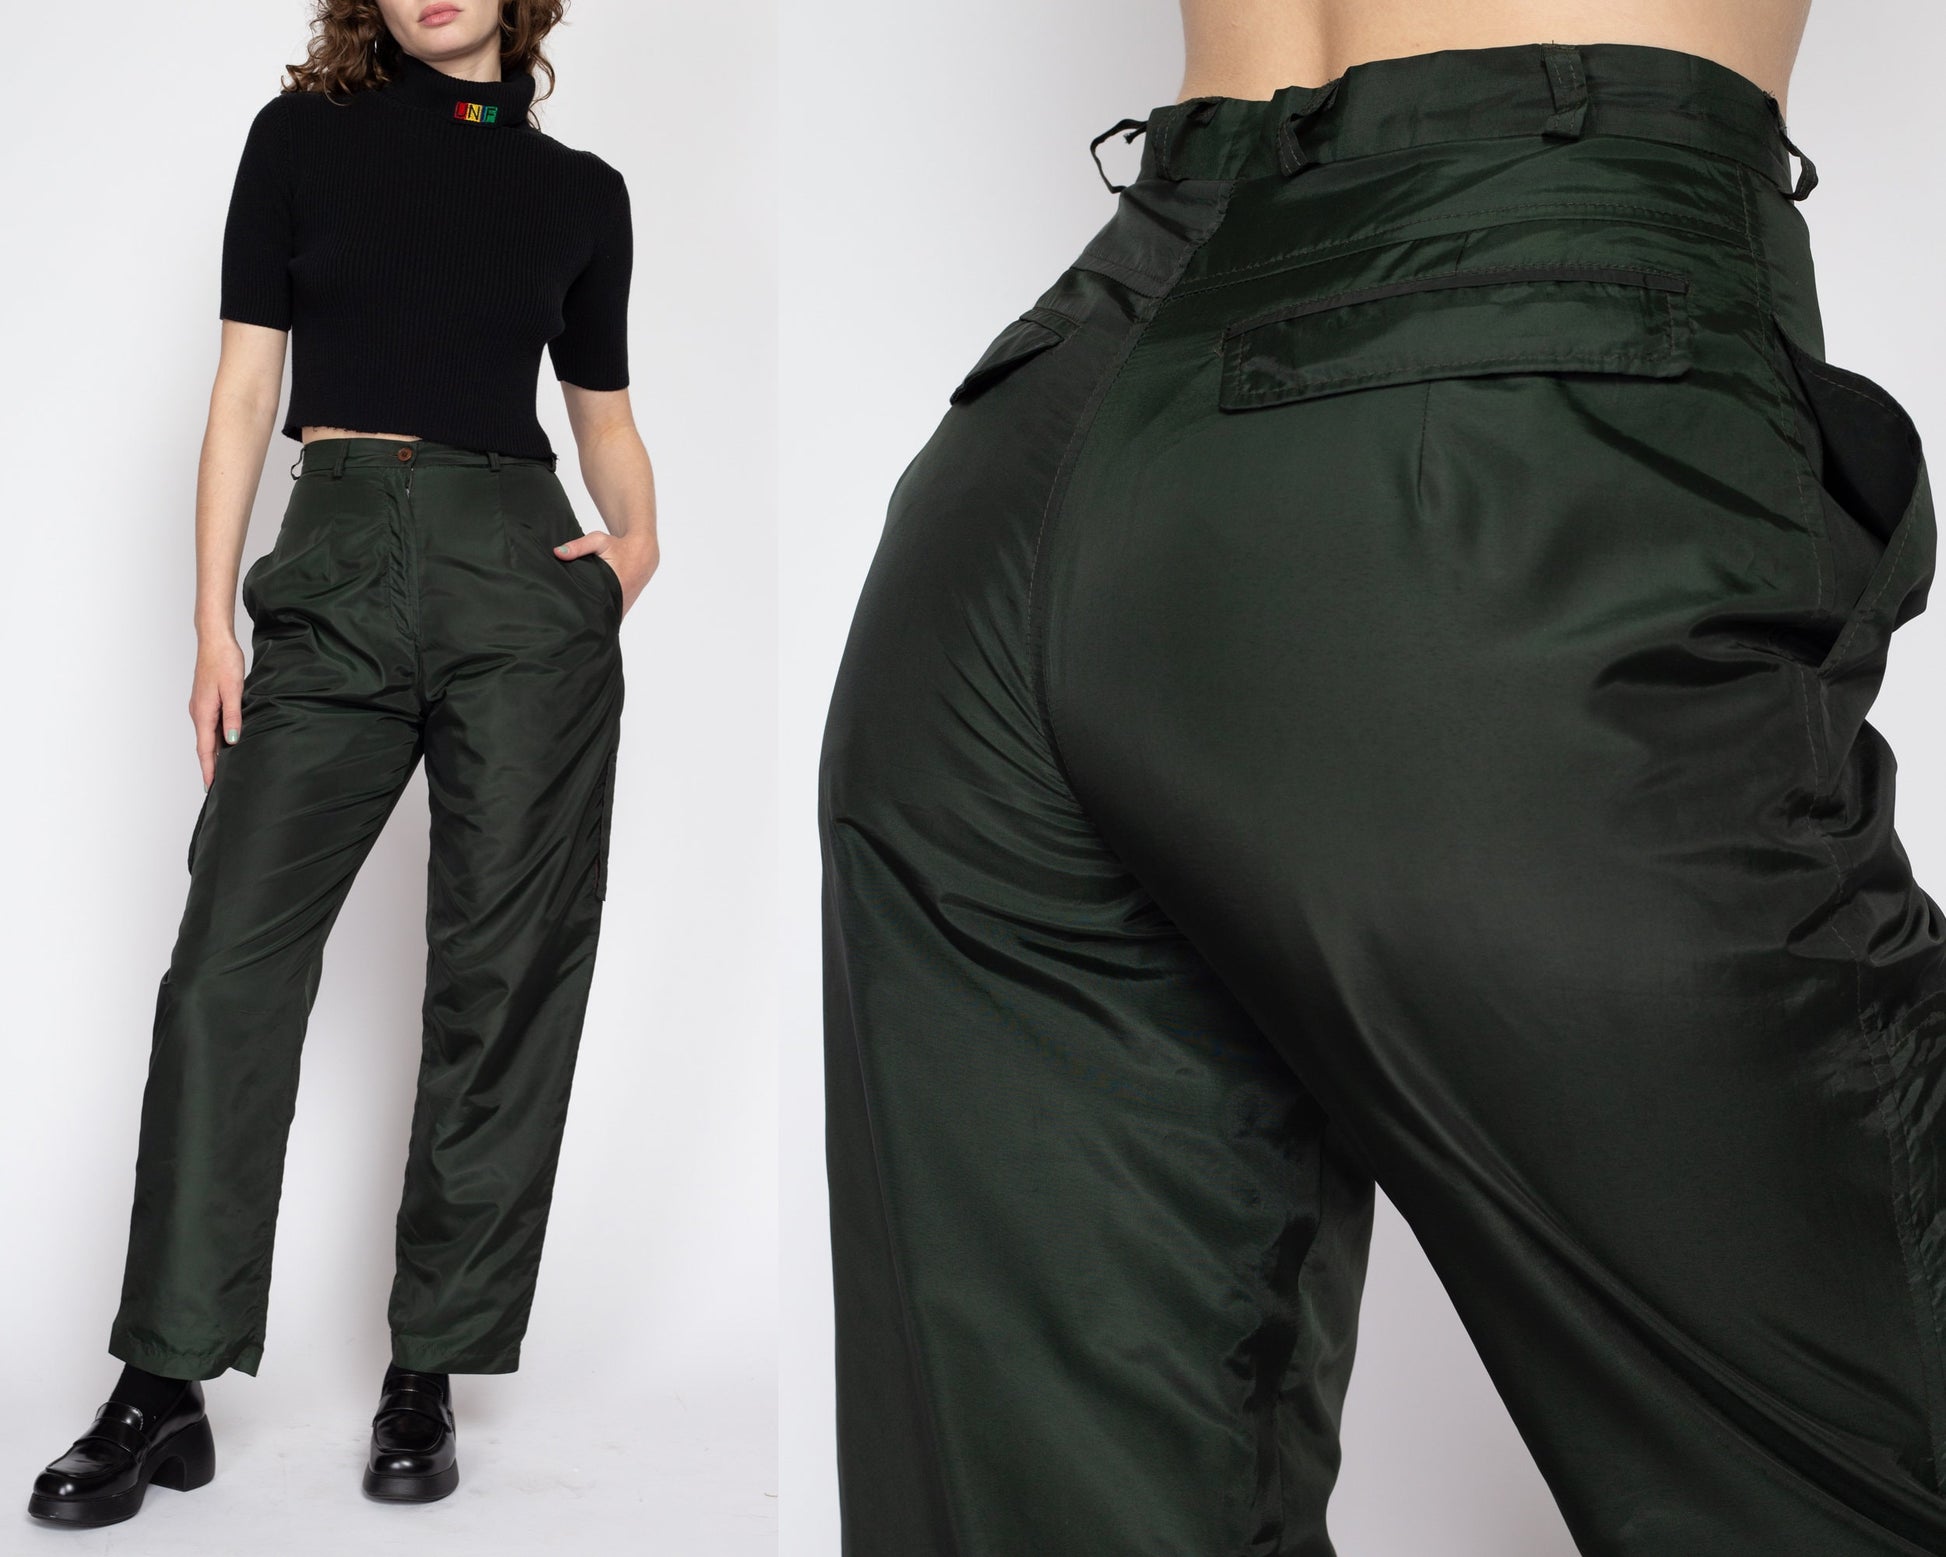 BN Zara High Waist Trousers with Lined Pants, Women's Fashion